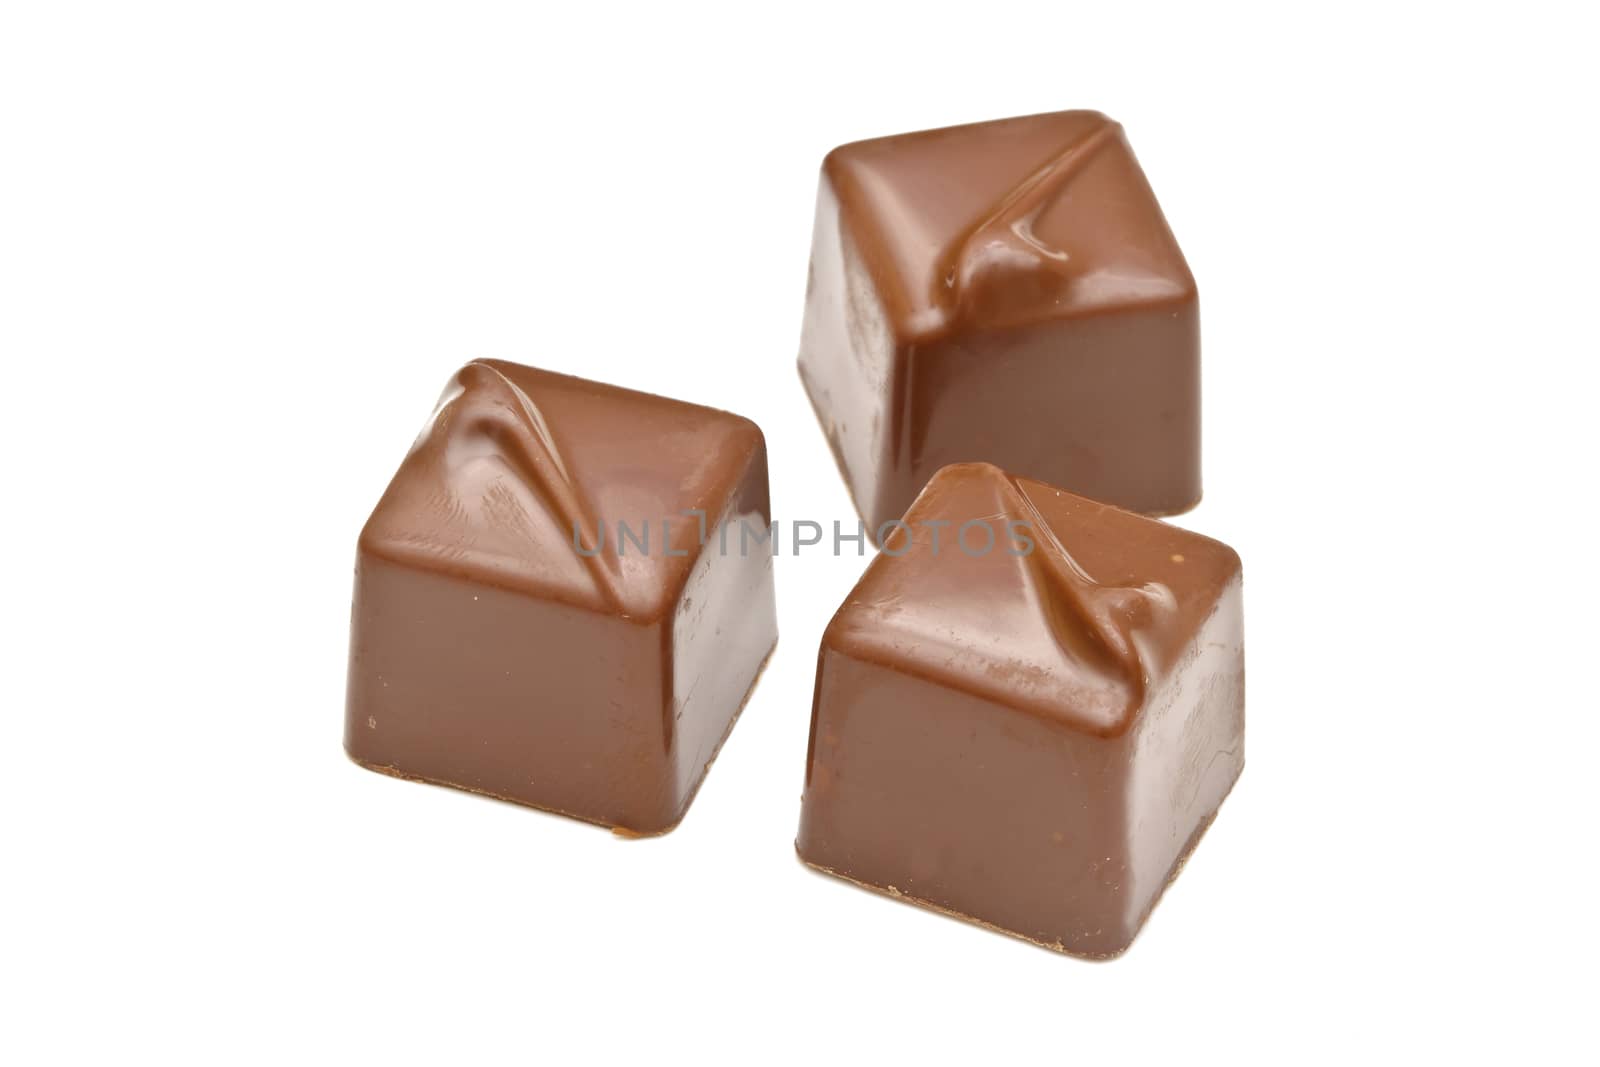 Chocolate pralines on white background